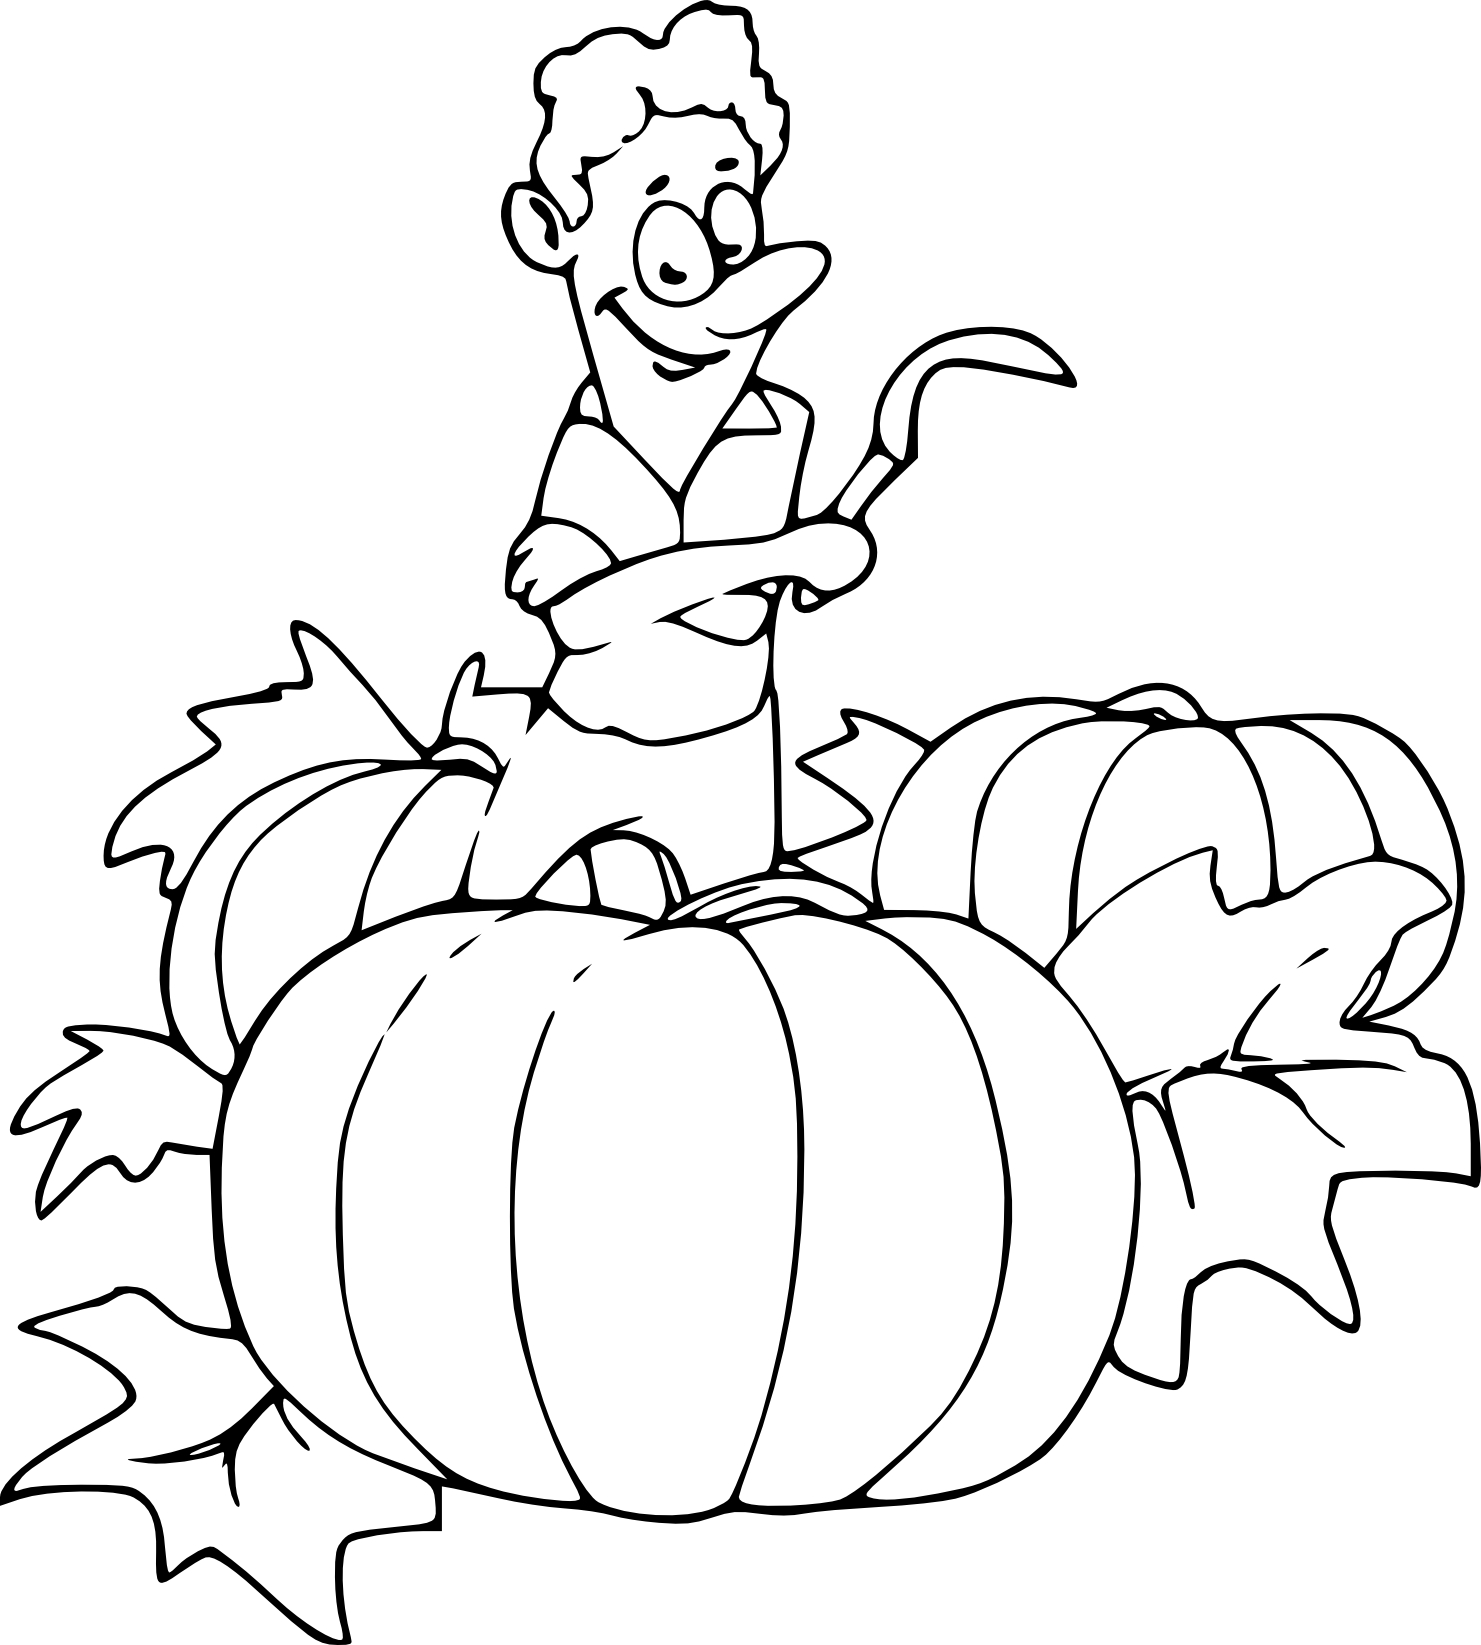 Pumpkin Picking coloring page